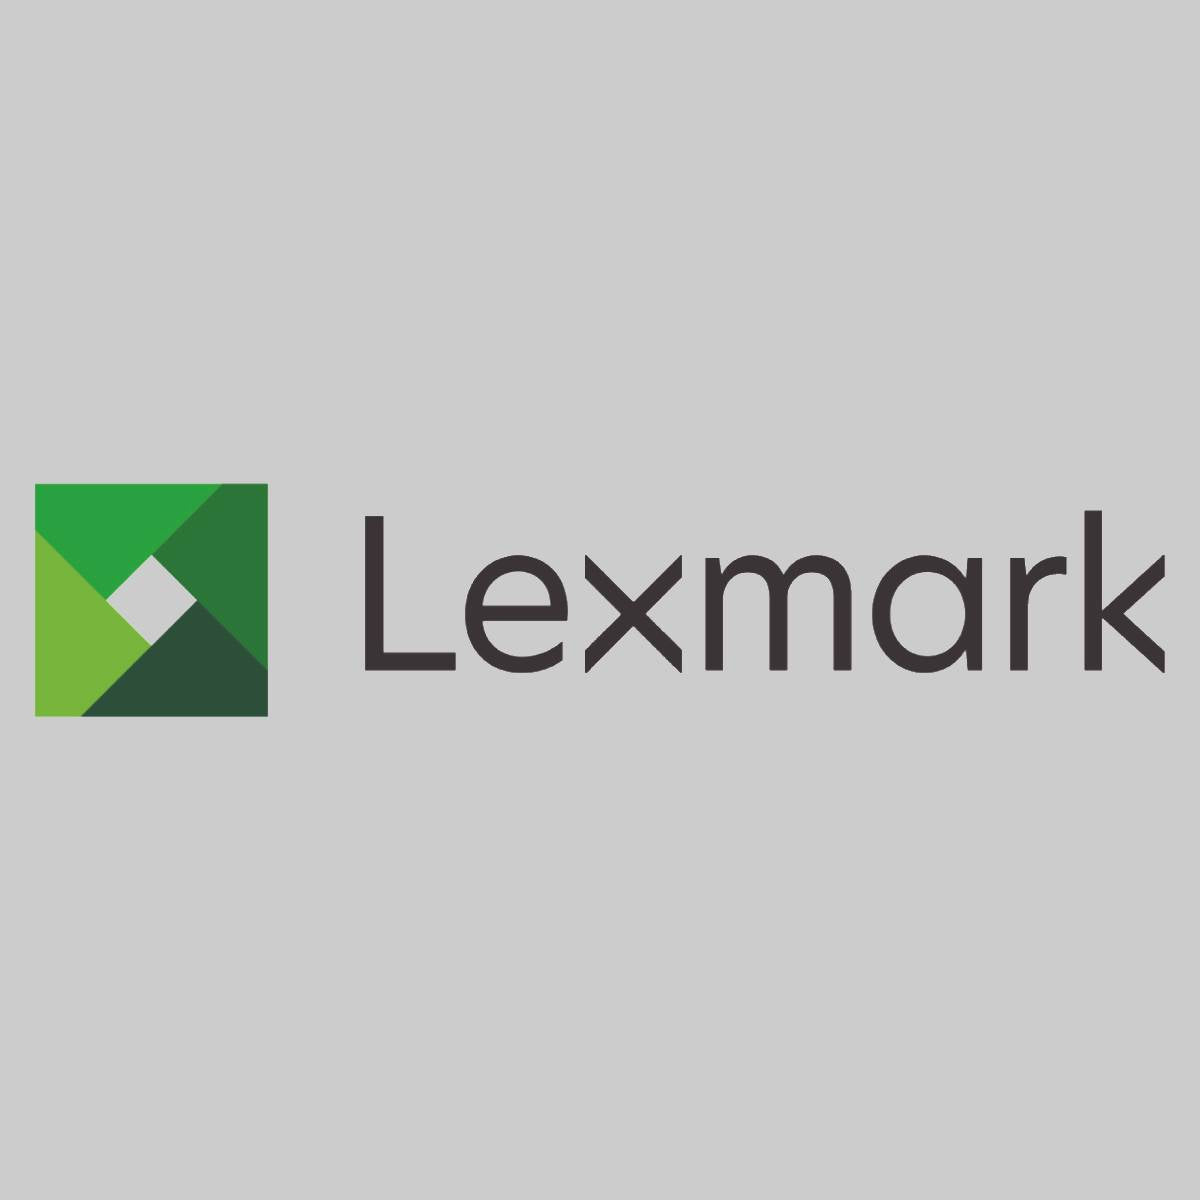 "Original Lexmark Photoconductor Black 76C0PK0 for 9200 Series Unit NEW OVP